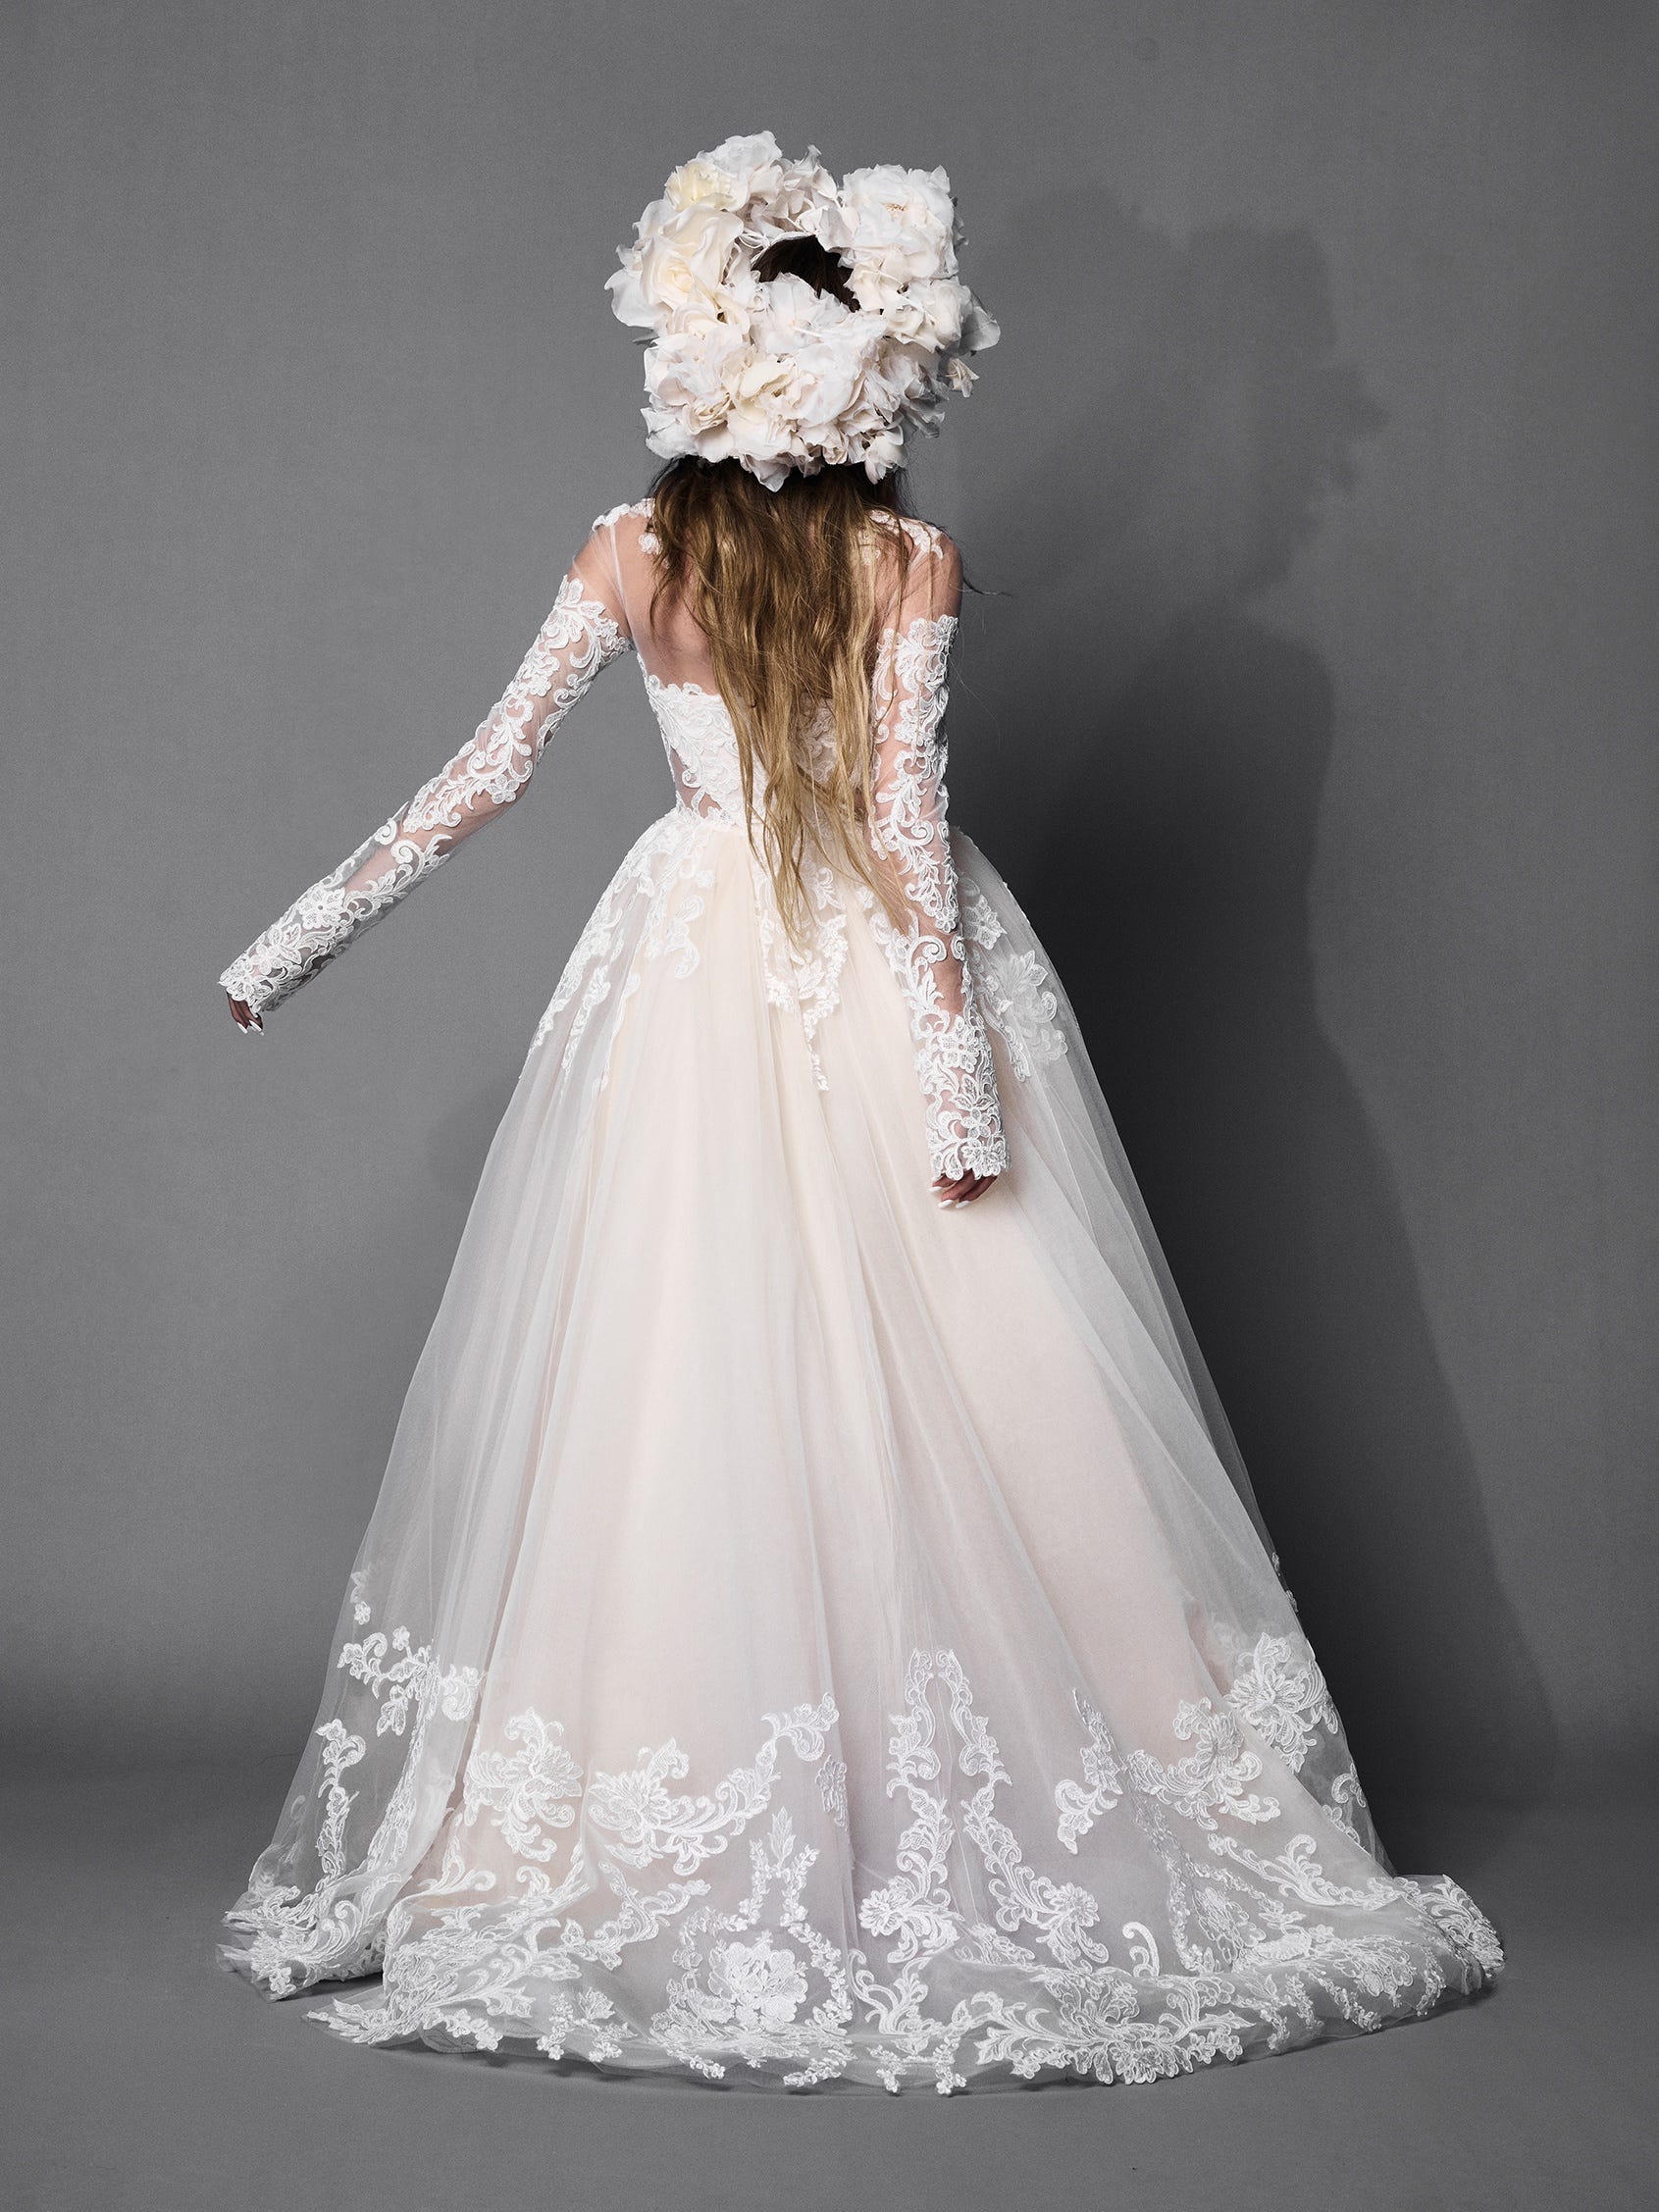 Enchanting Lace Princess Ballgown Wedding Dress with Spaghetti Straps